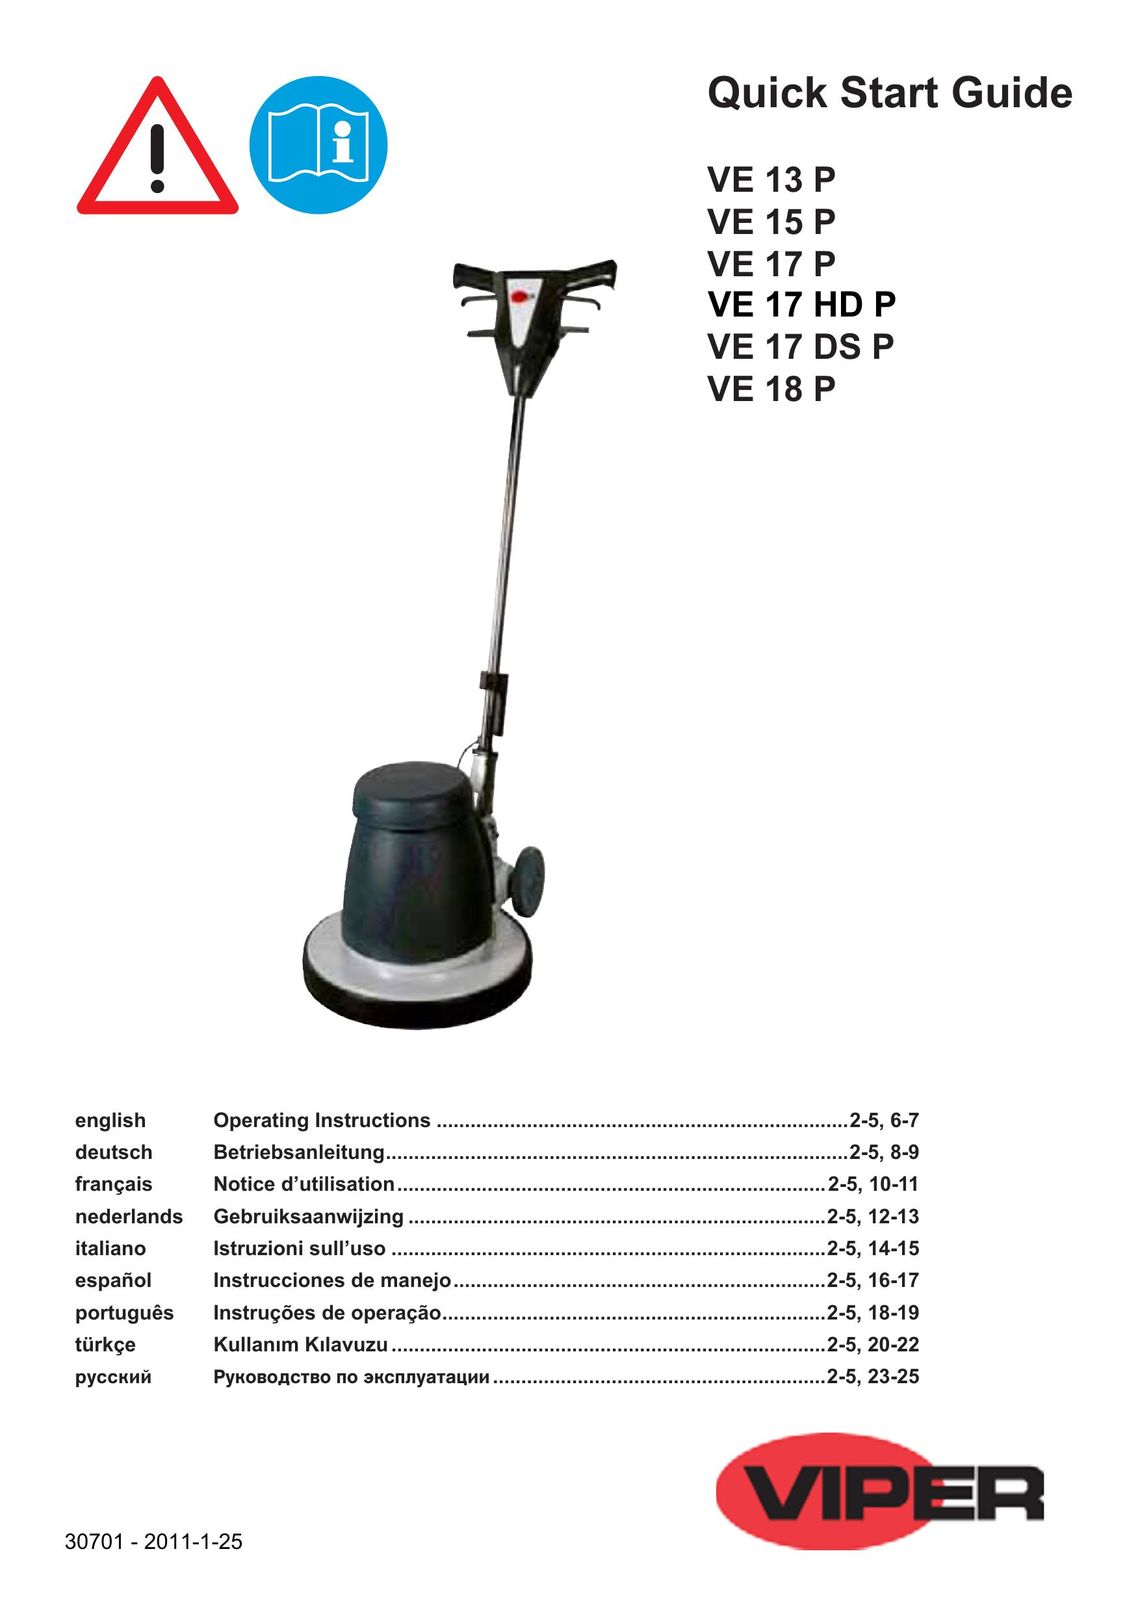 Viper VE 17 DS P Carpet Cleaner User Manual